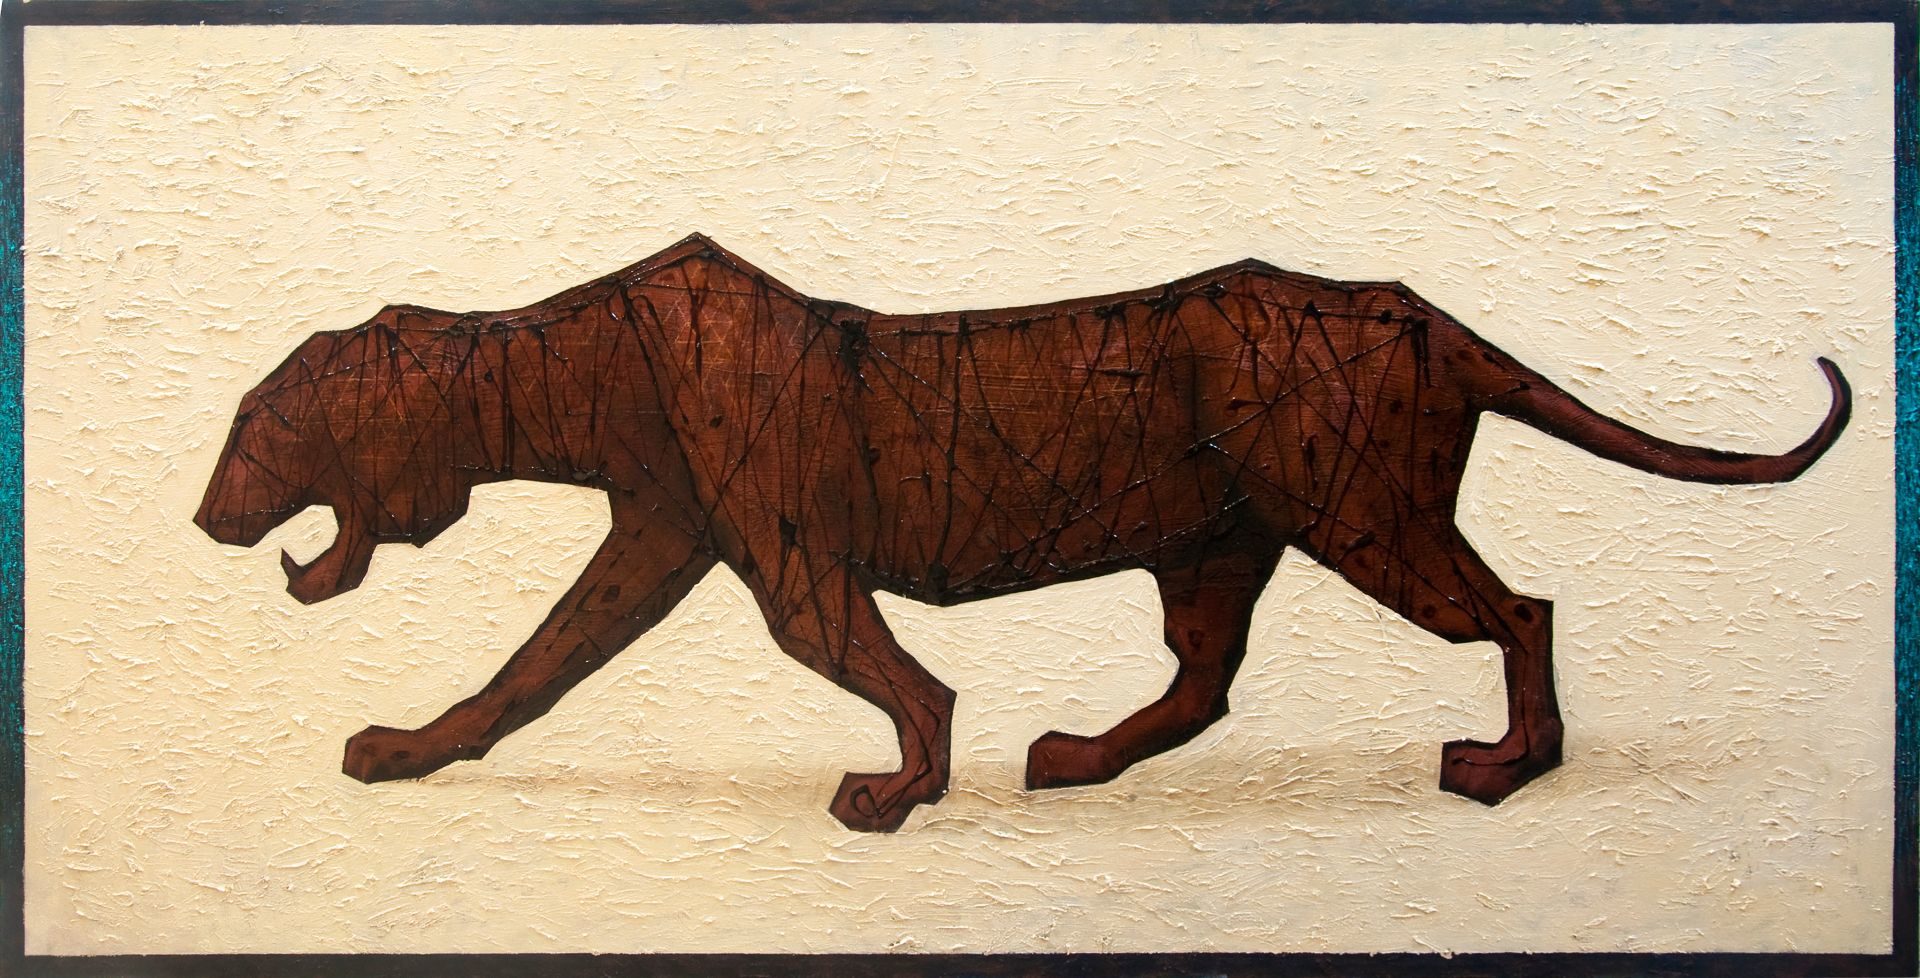 Brown panther 90x180cm,2016